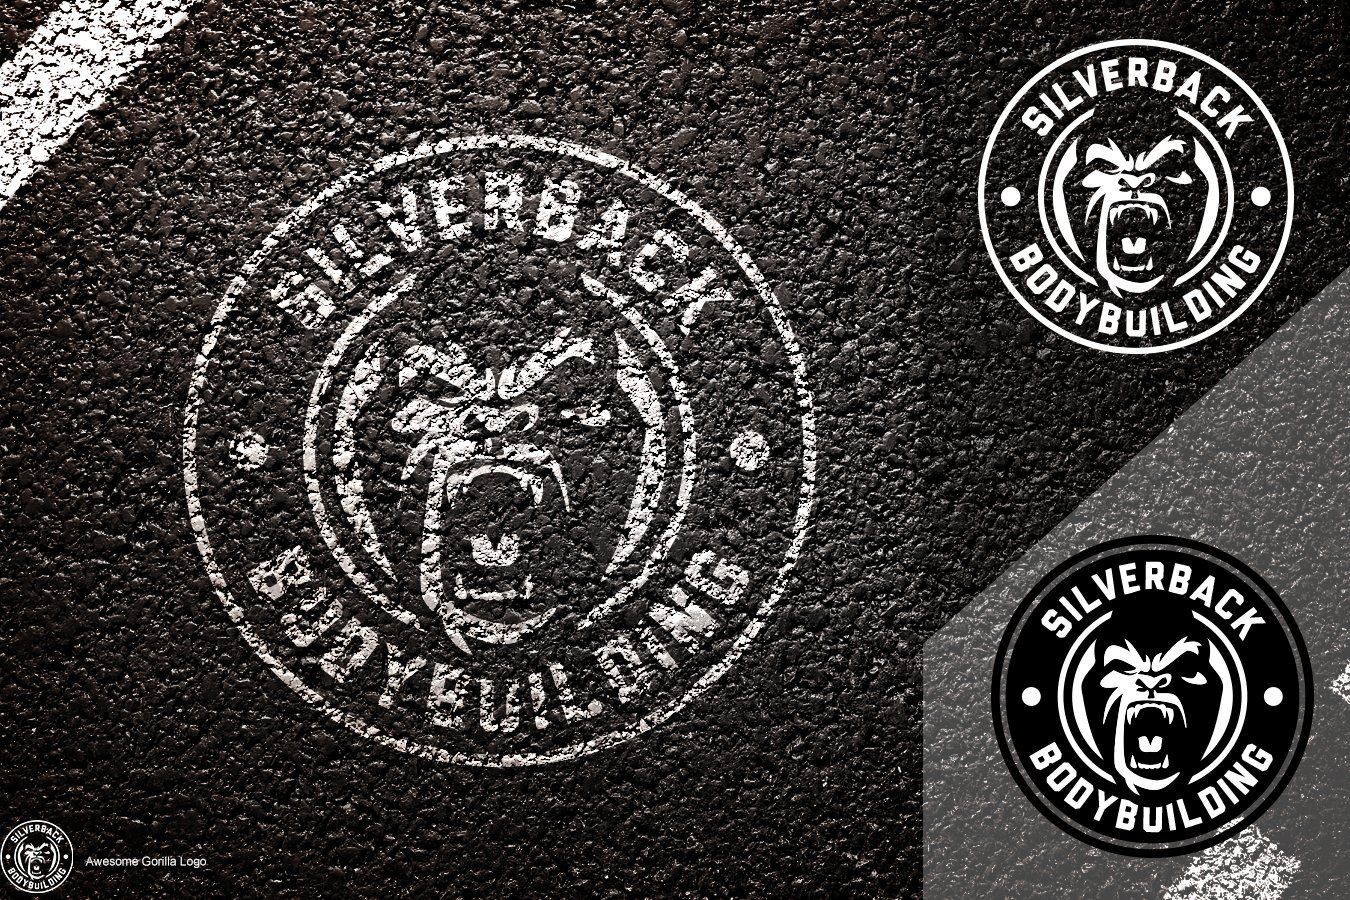 Gorilla logo cover image.